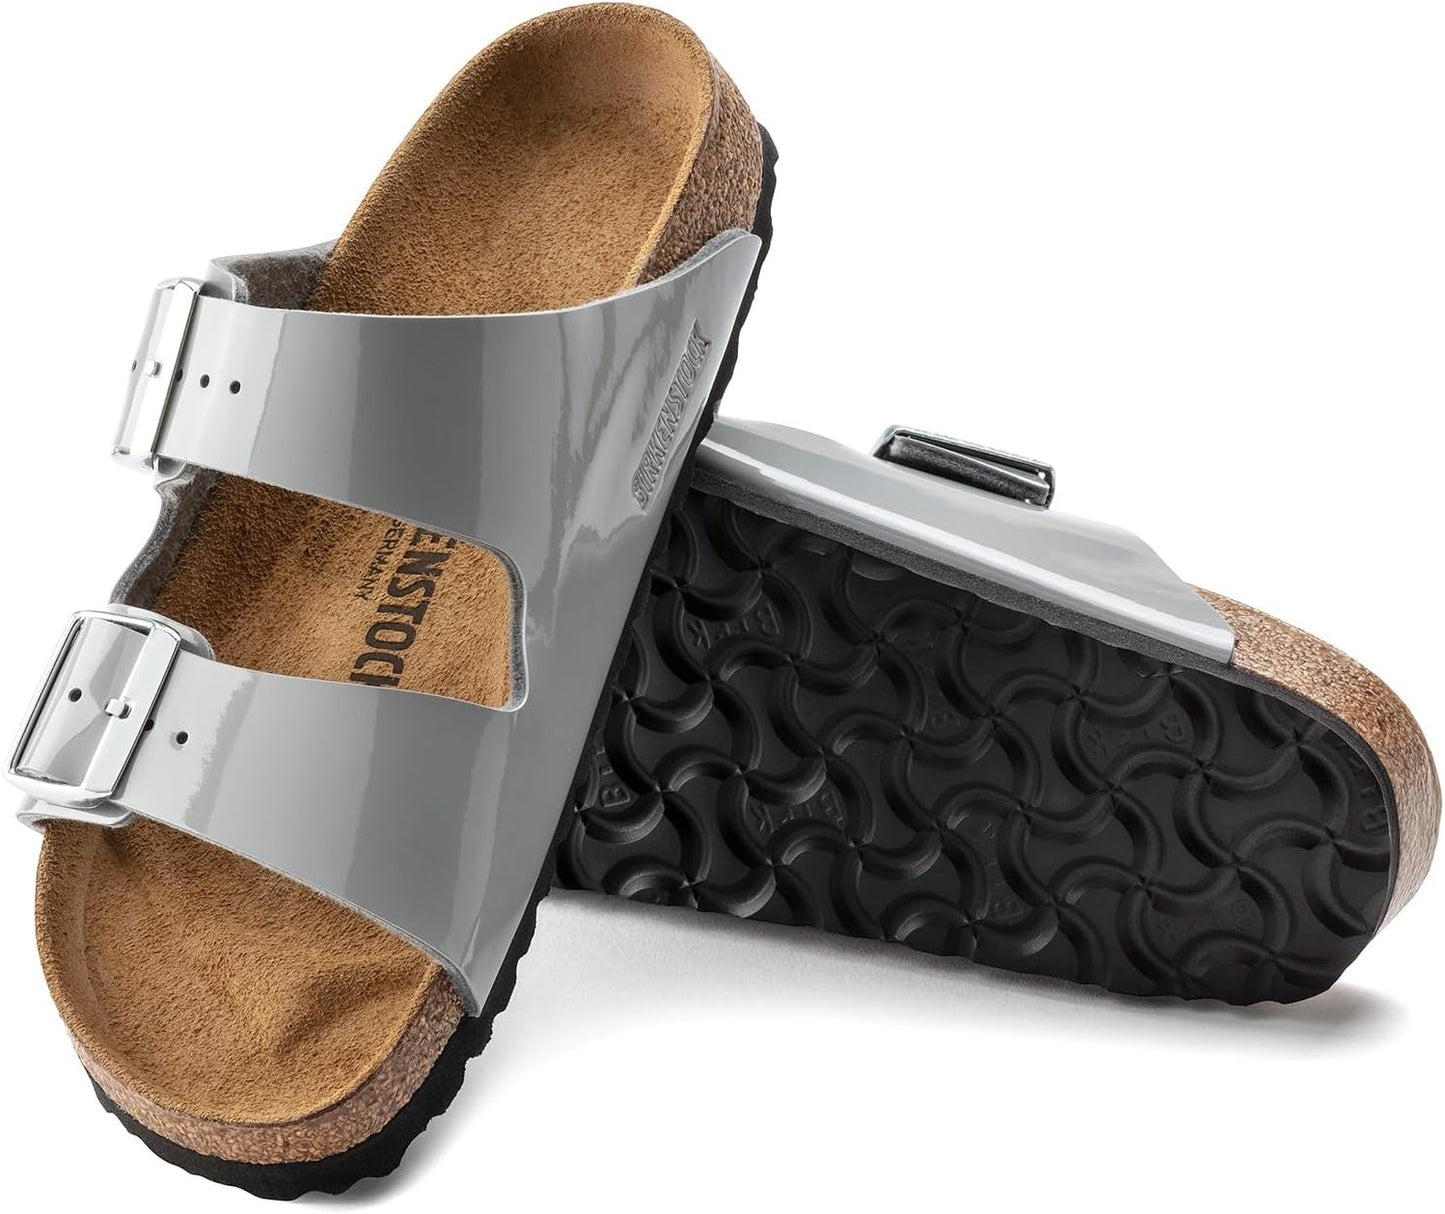 Arizona Soft Footbed Leather Sandal